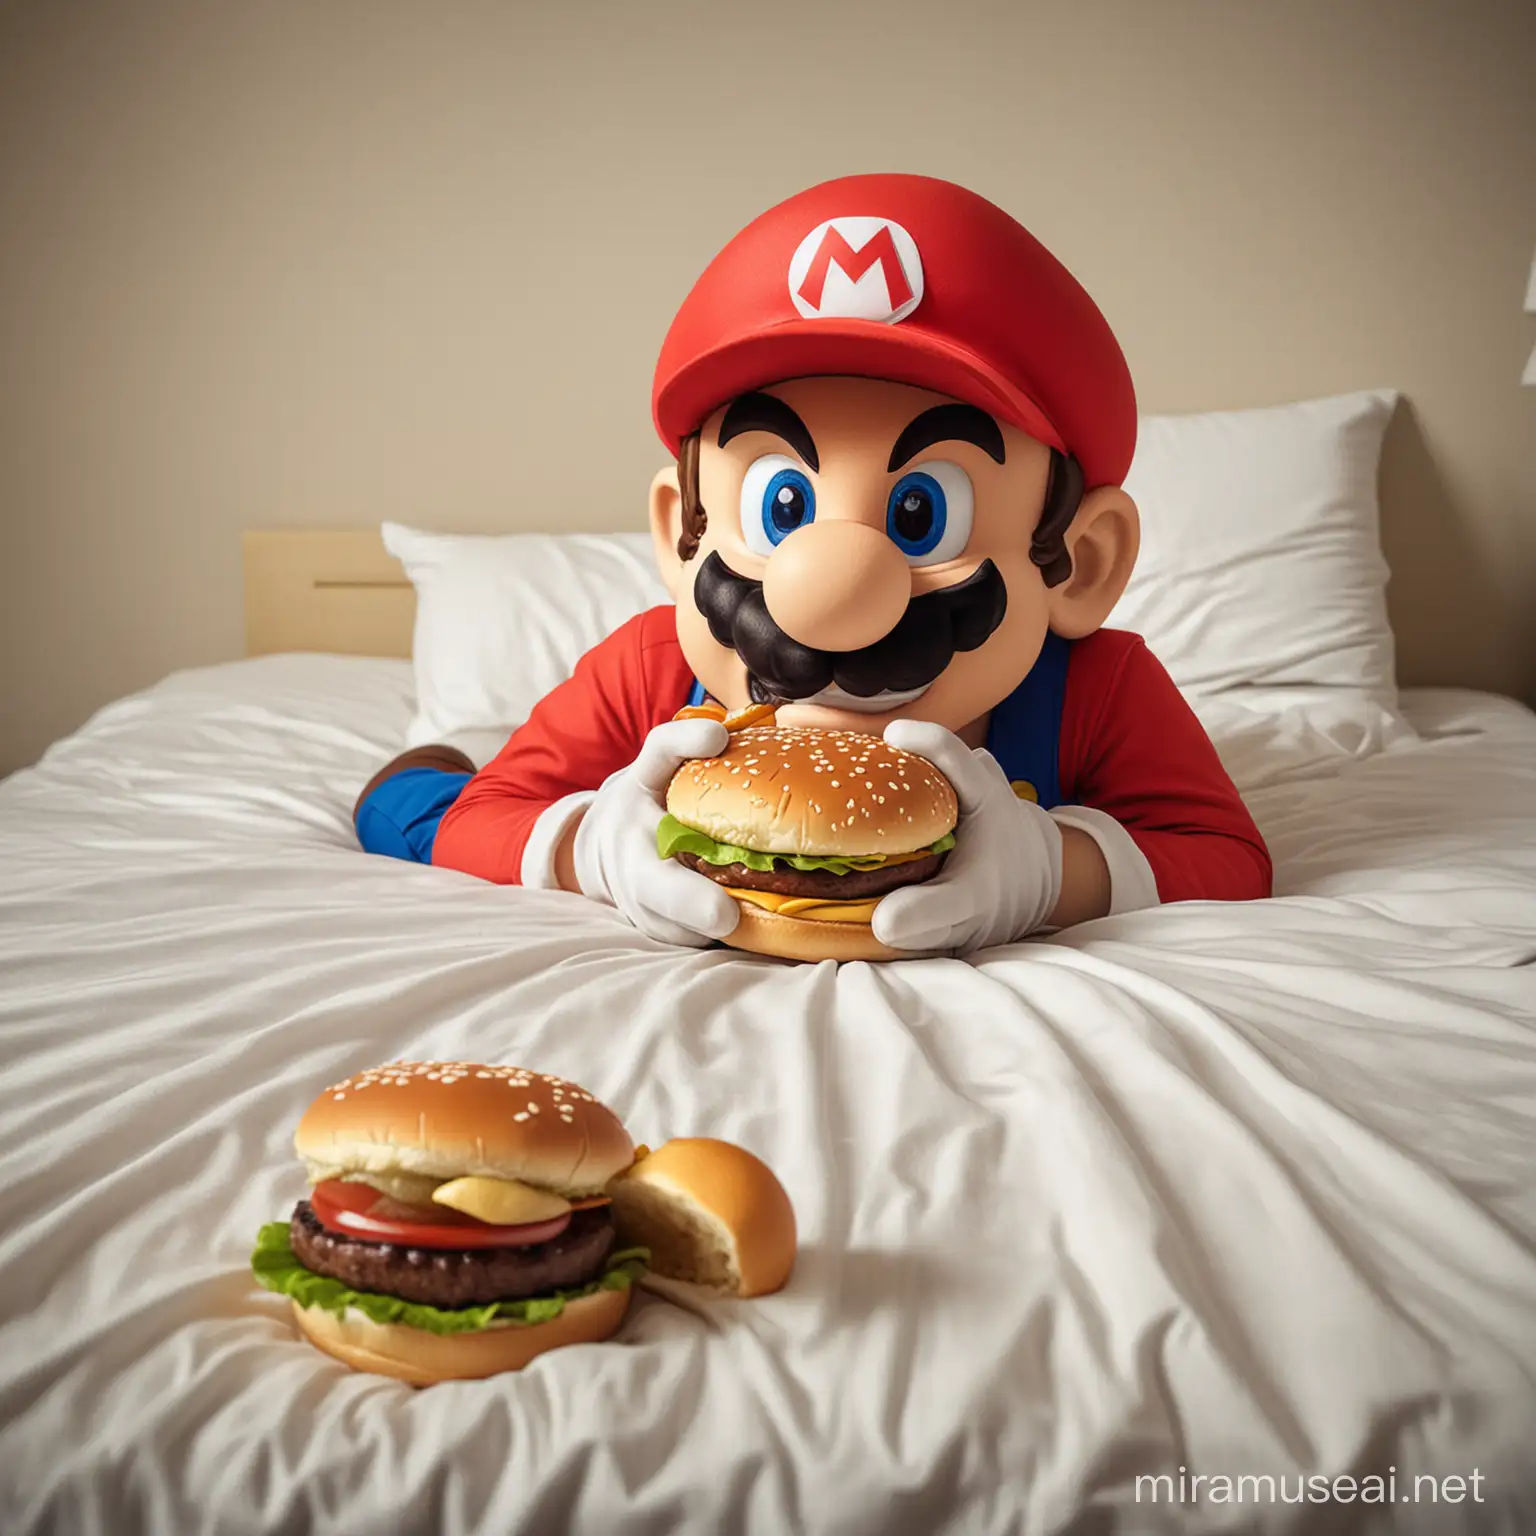 Супер Марио ест гамбургер и лежит на кровати